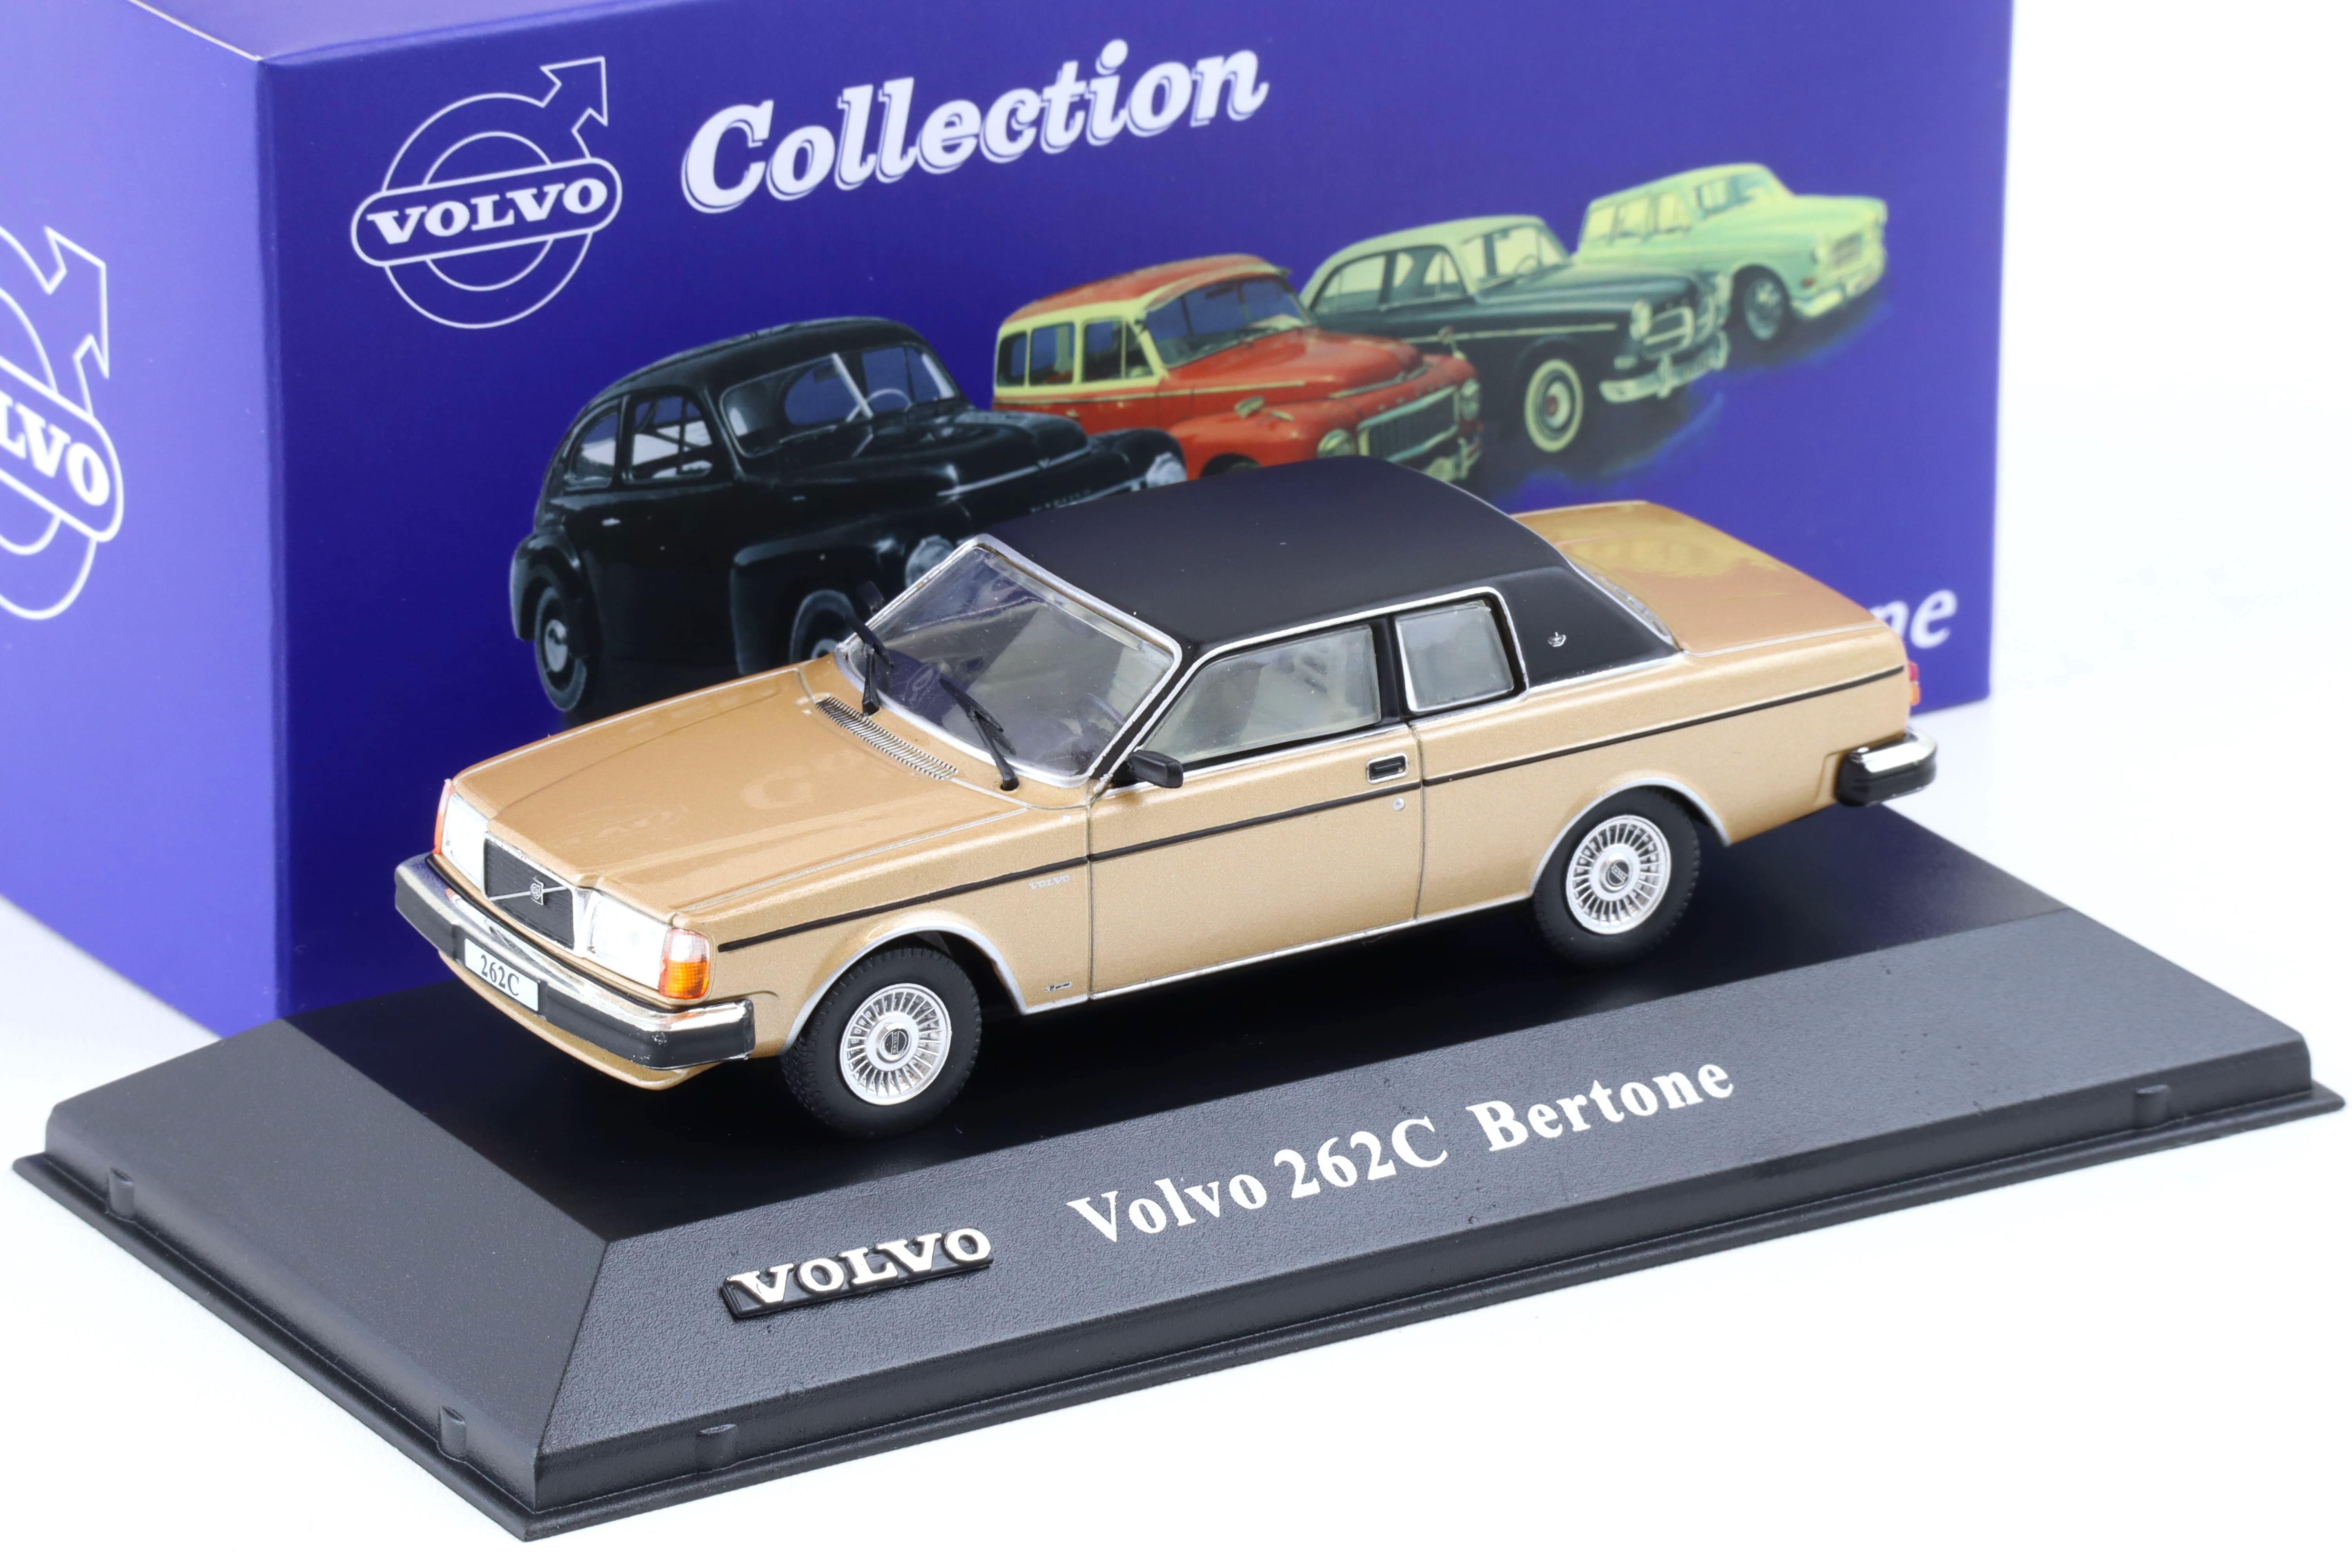 1:43 Atlas IXO Volvo Collection 1982 Volvo 262C Bertone gold metallic